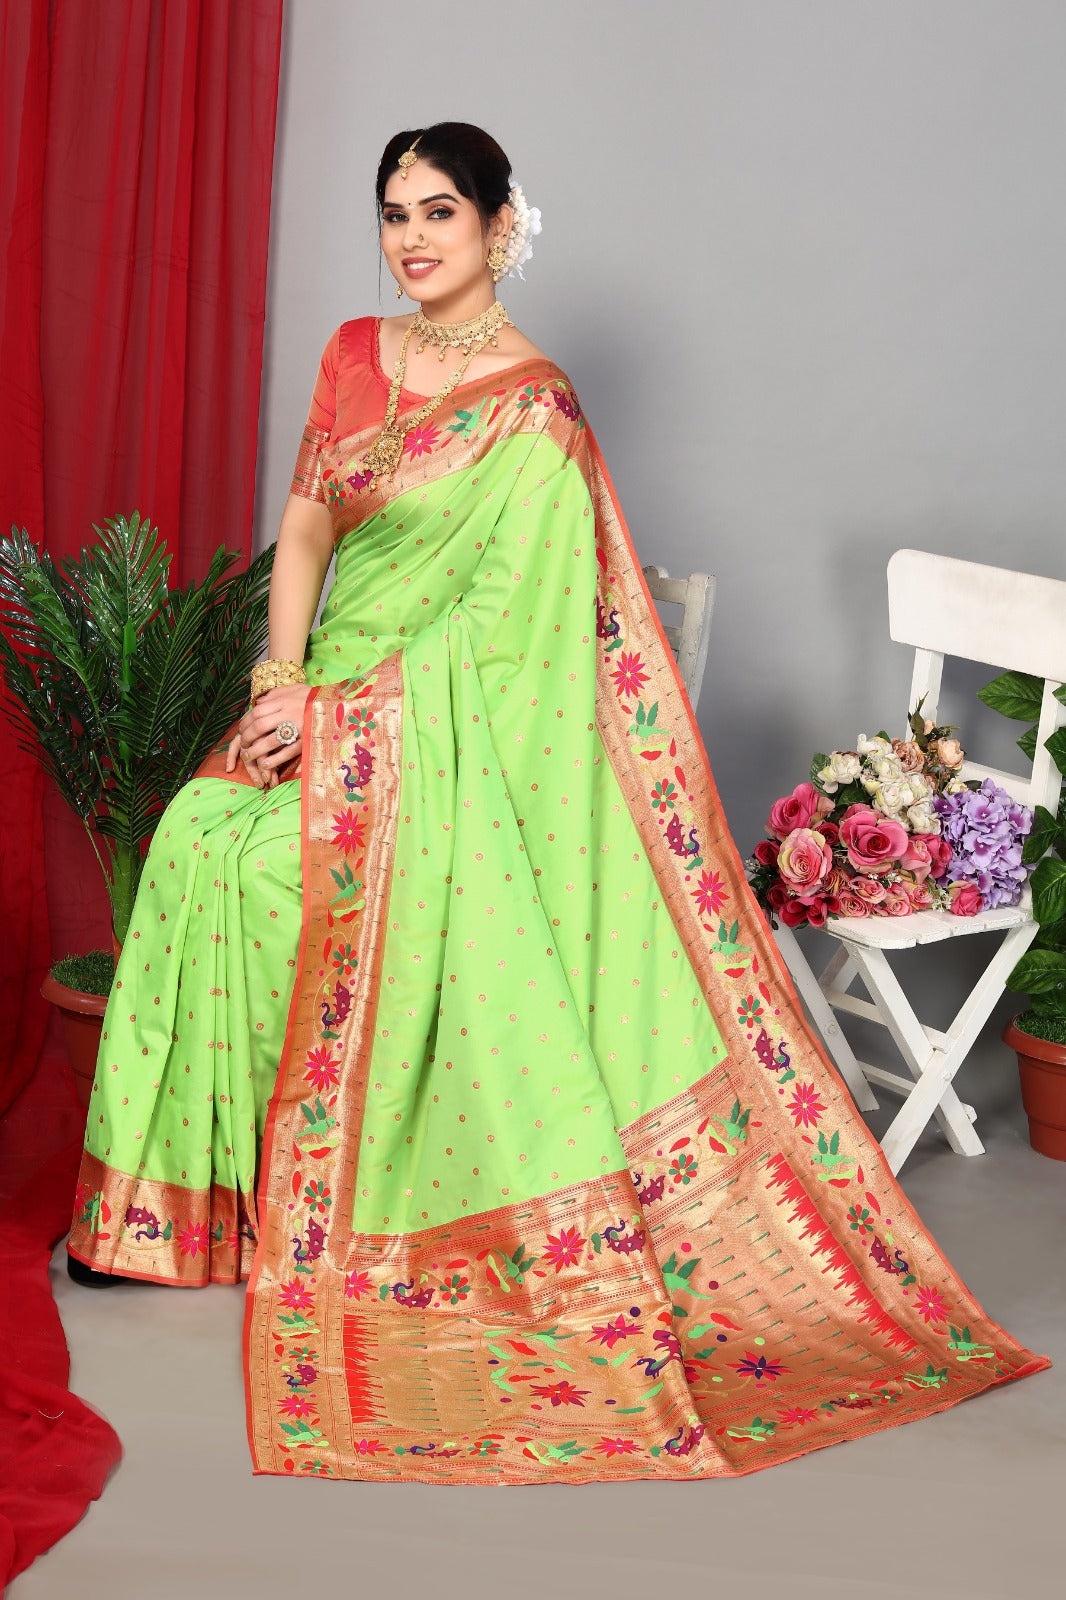 Paithani Sarees - 35 Beautiful and Latest Designs For Traditional Look |  Saree, Saree wedding, Women wedding guest dresses